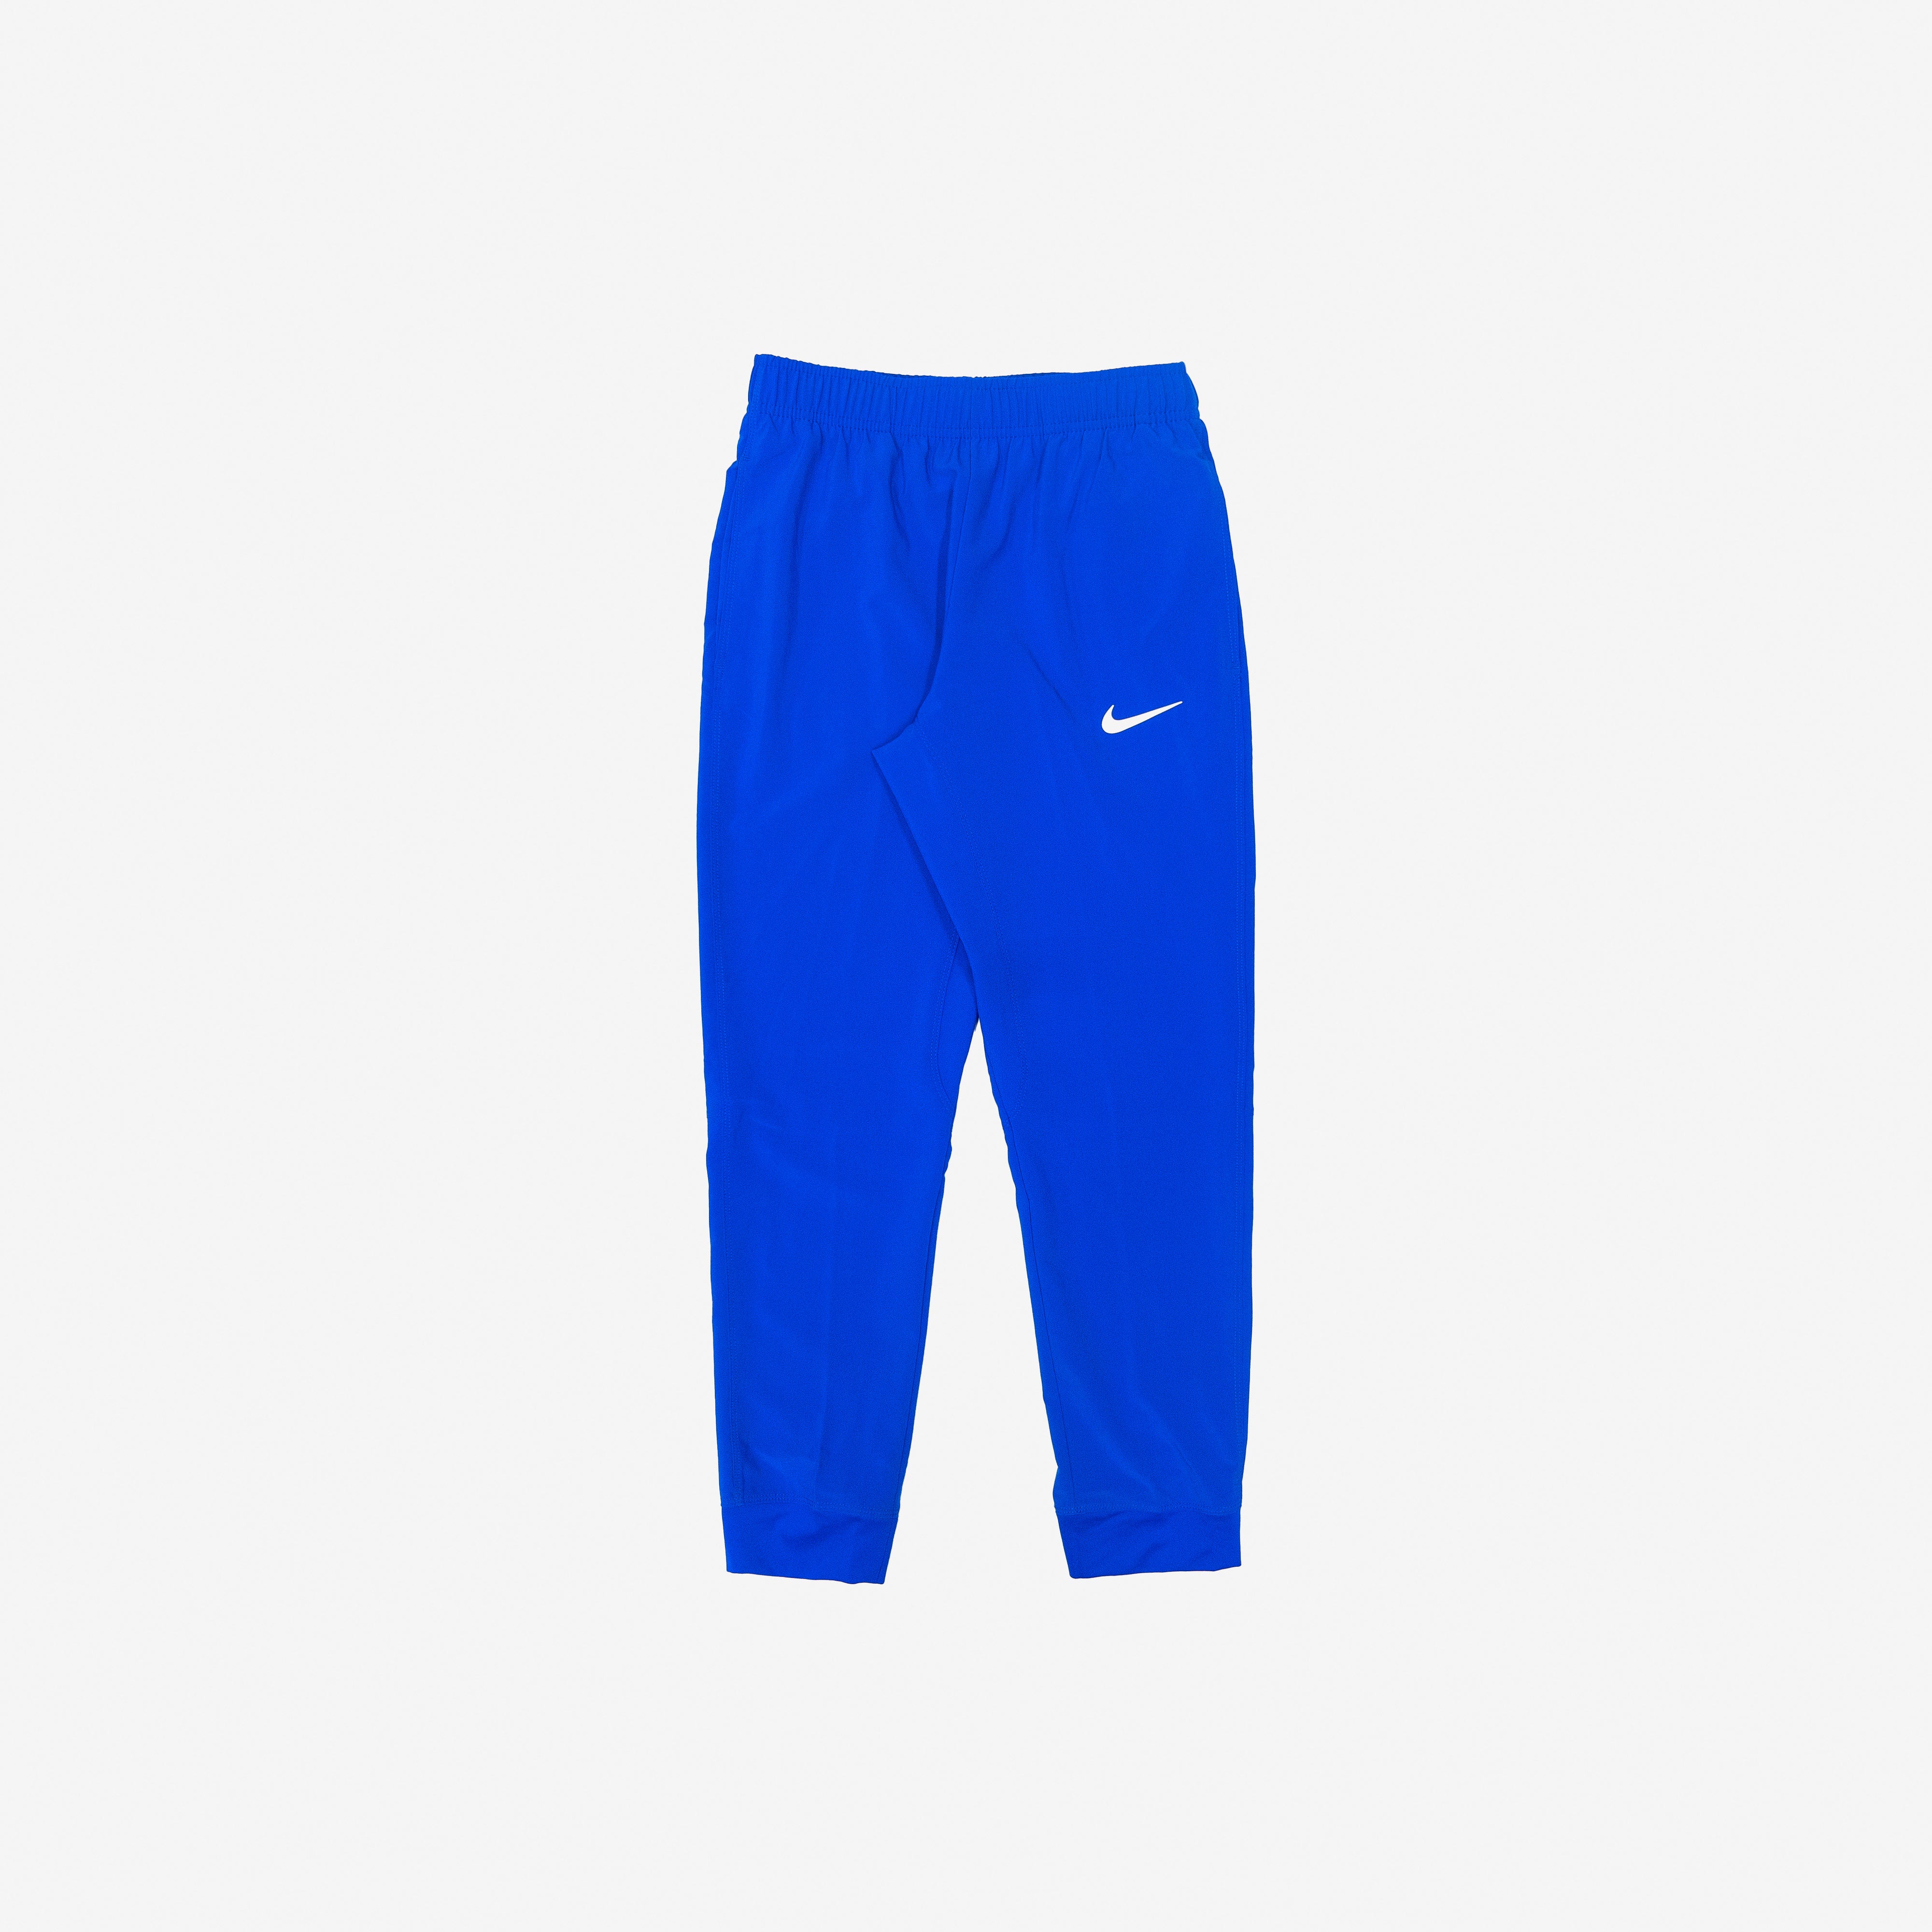 Nike Boys Woven Training Pants